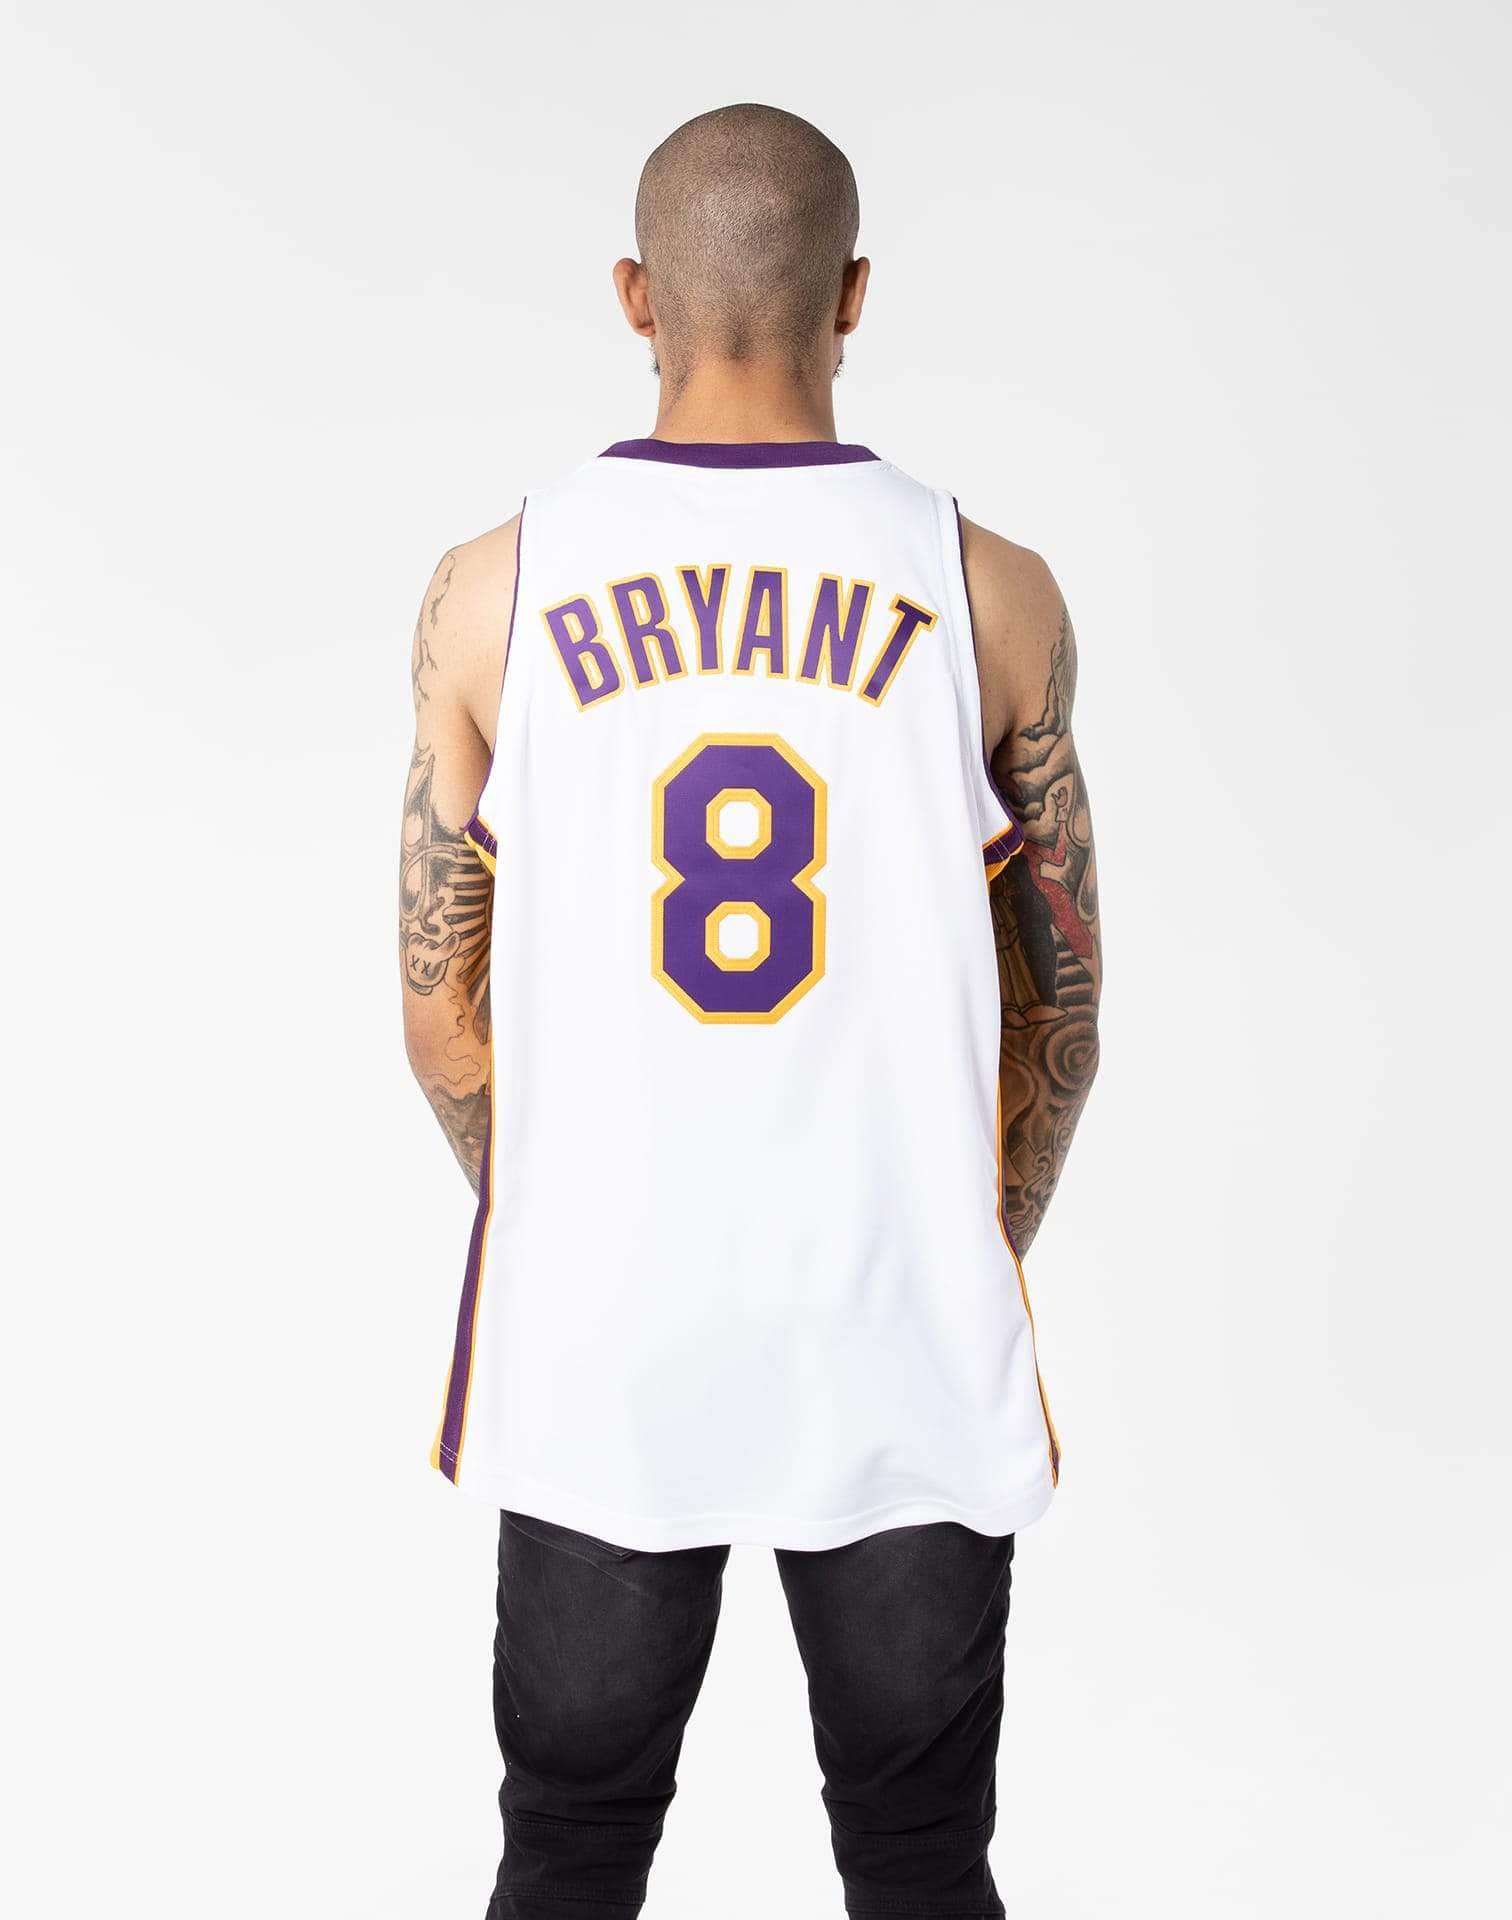 Kobe Bryant #8 Los Angeles Lakers M&Ness Alternate 2003-04 White Jersey